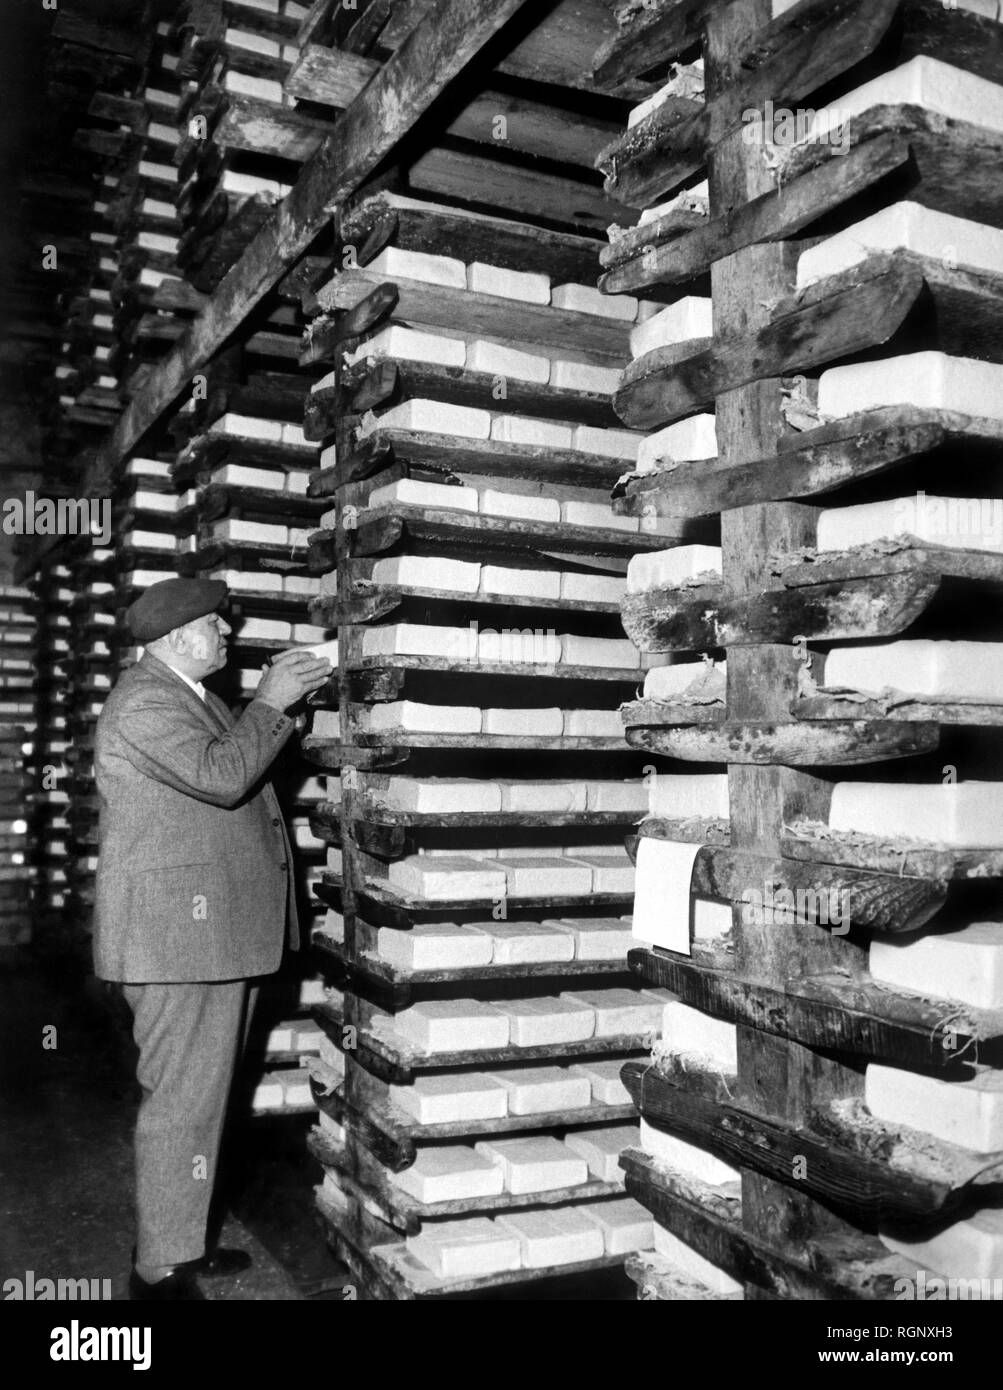 the maturing of taleggio cheese, italy 1965 Stock Photo